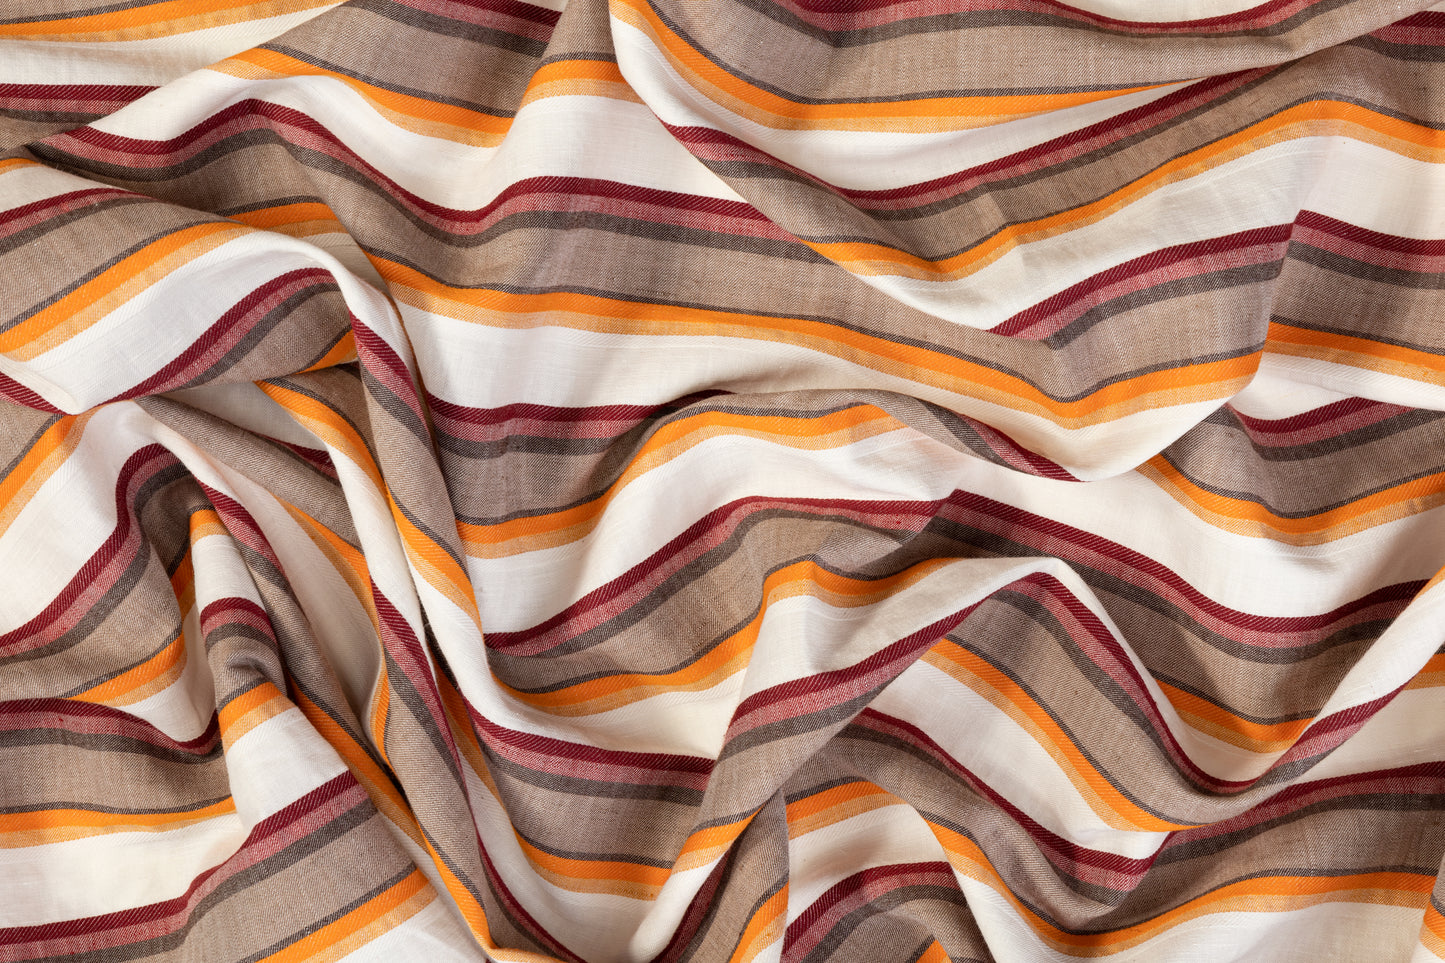 Striped Italian Linen - Orange, Burgundy, Brown